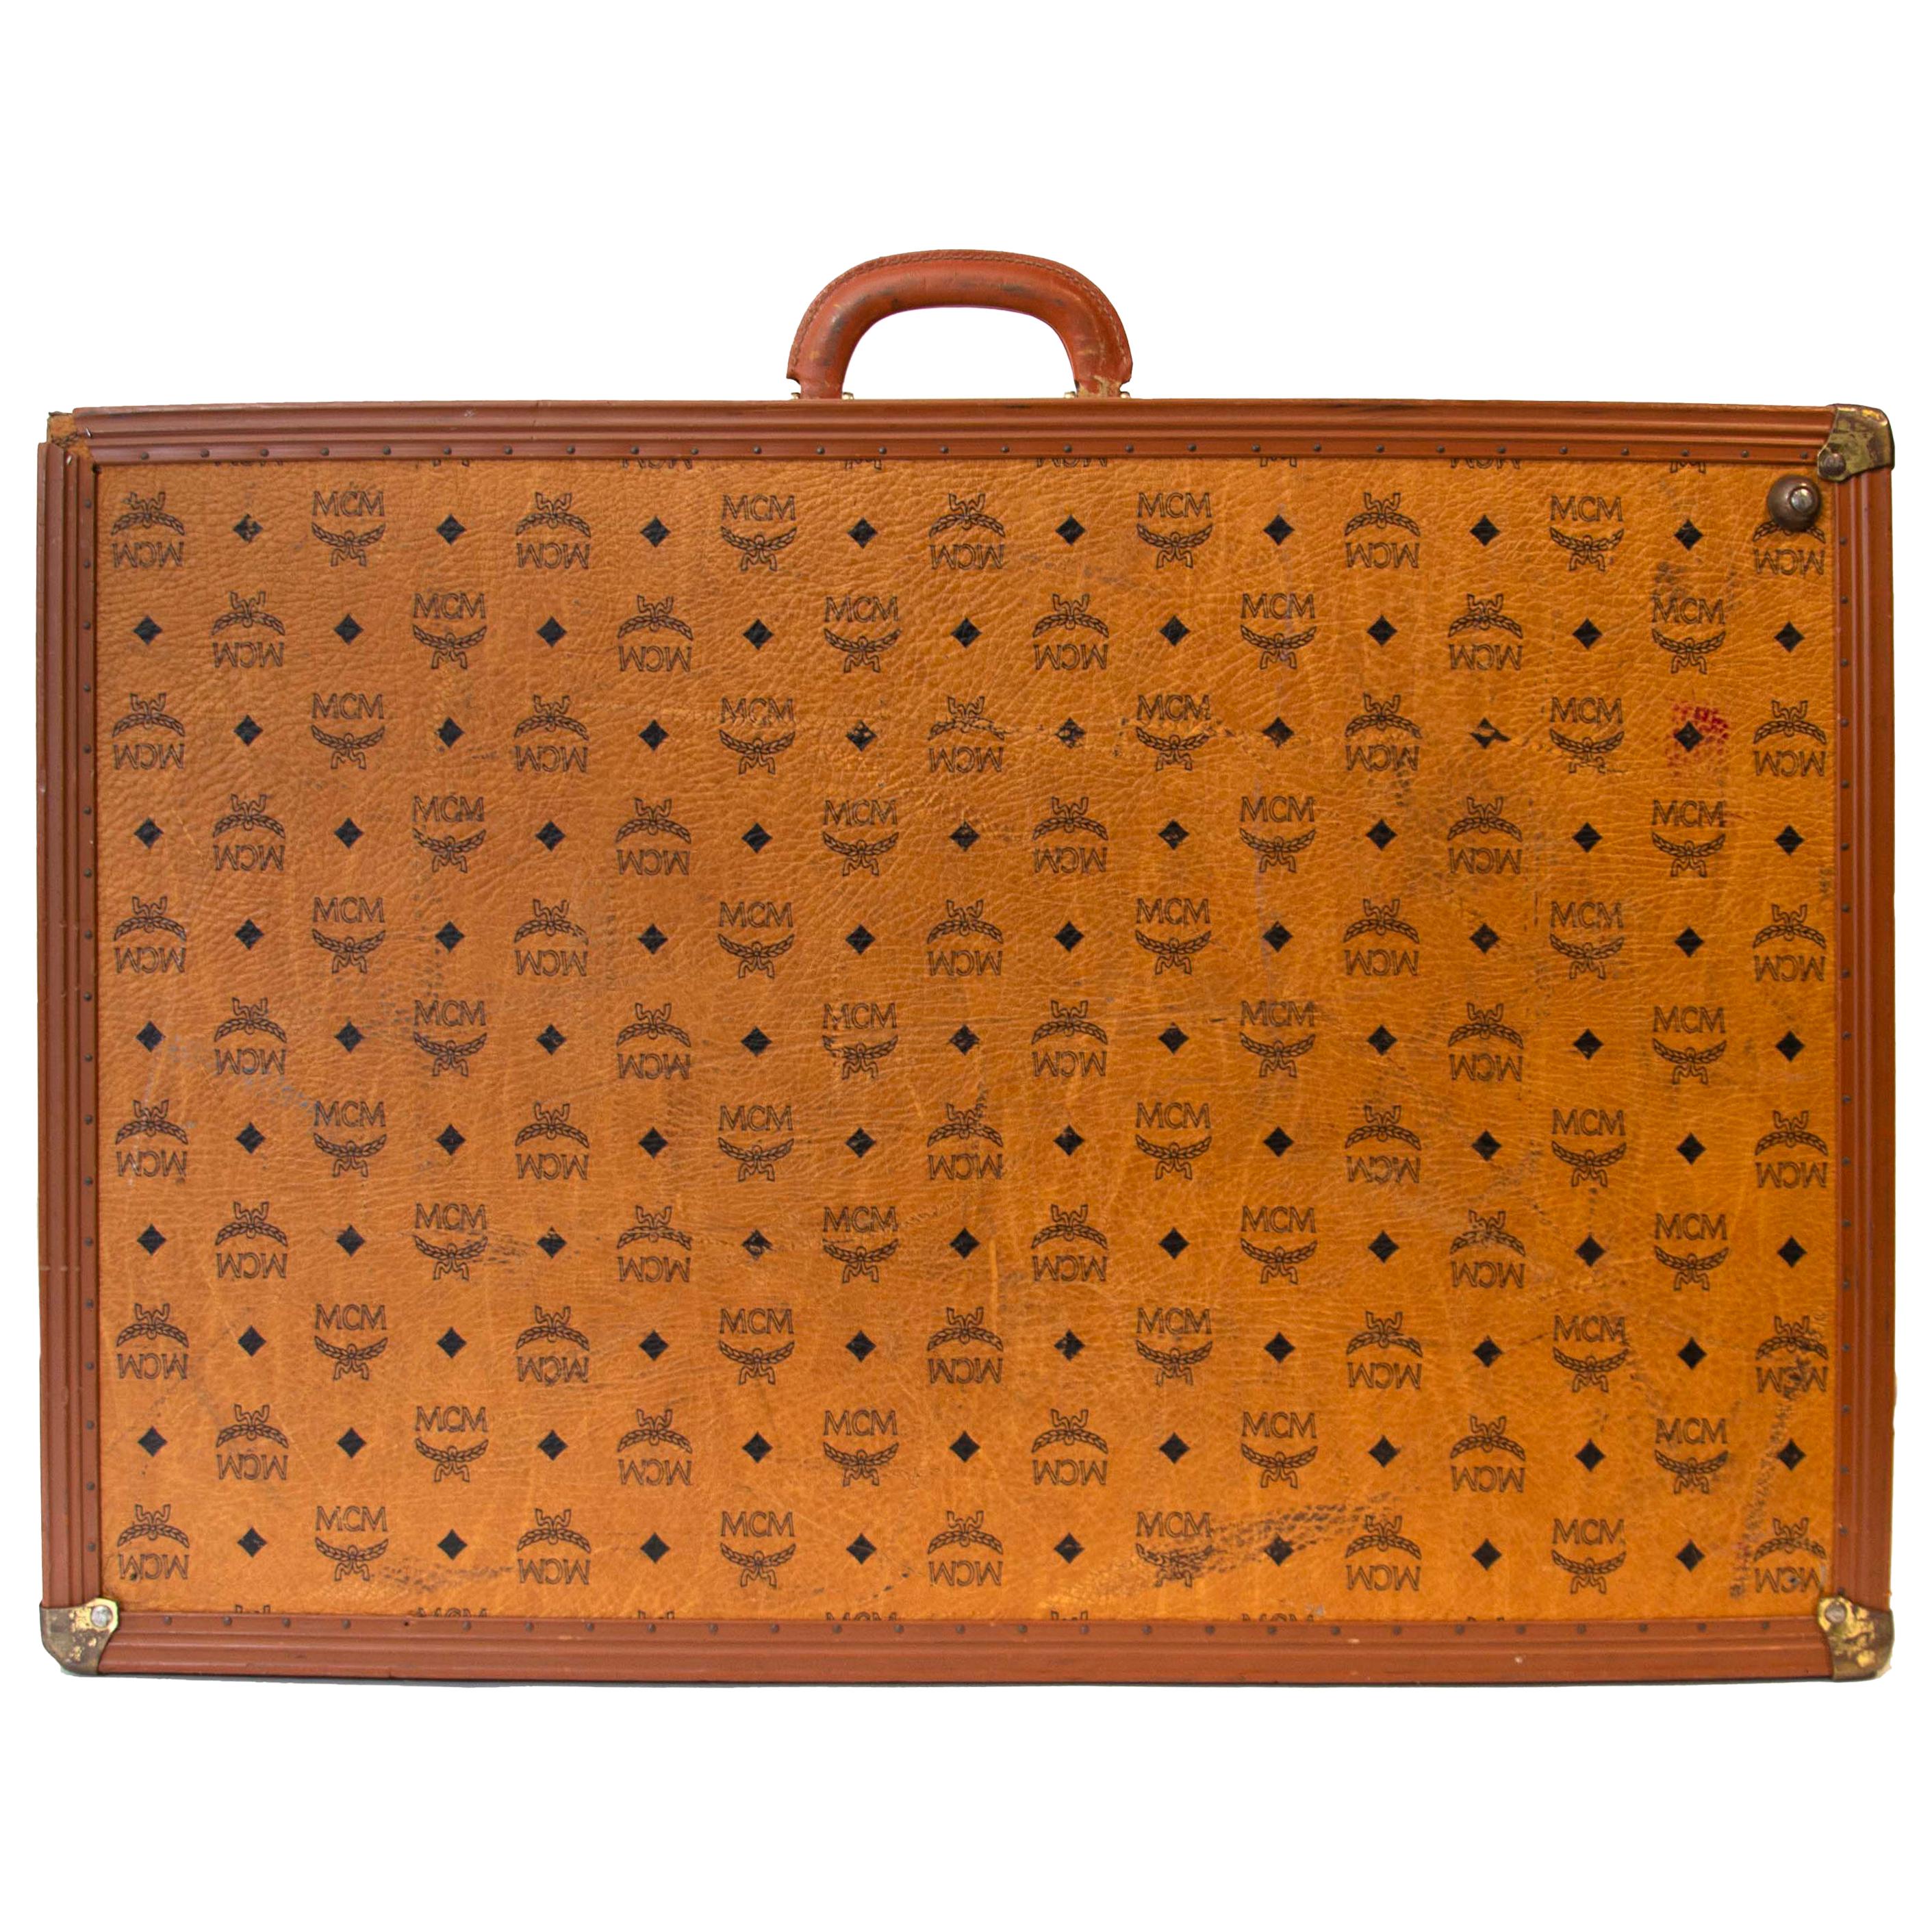 MCM Large Cognac Travel Trunk Luggage